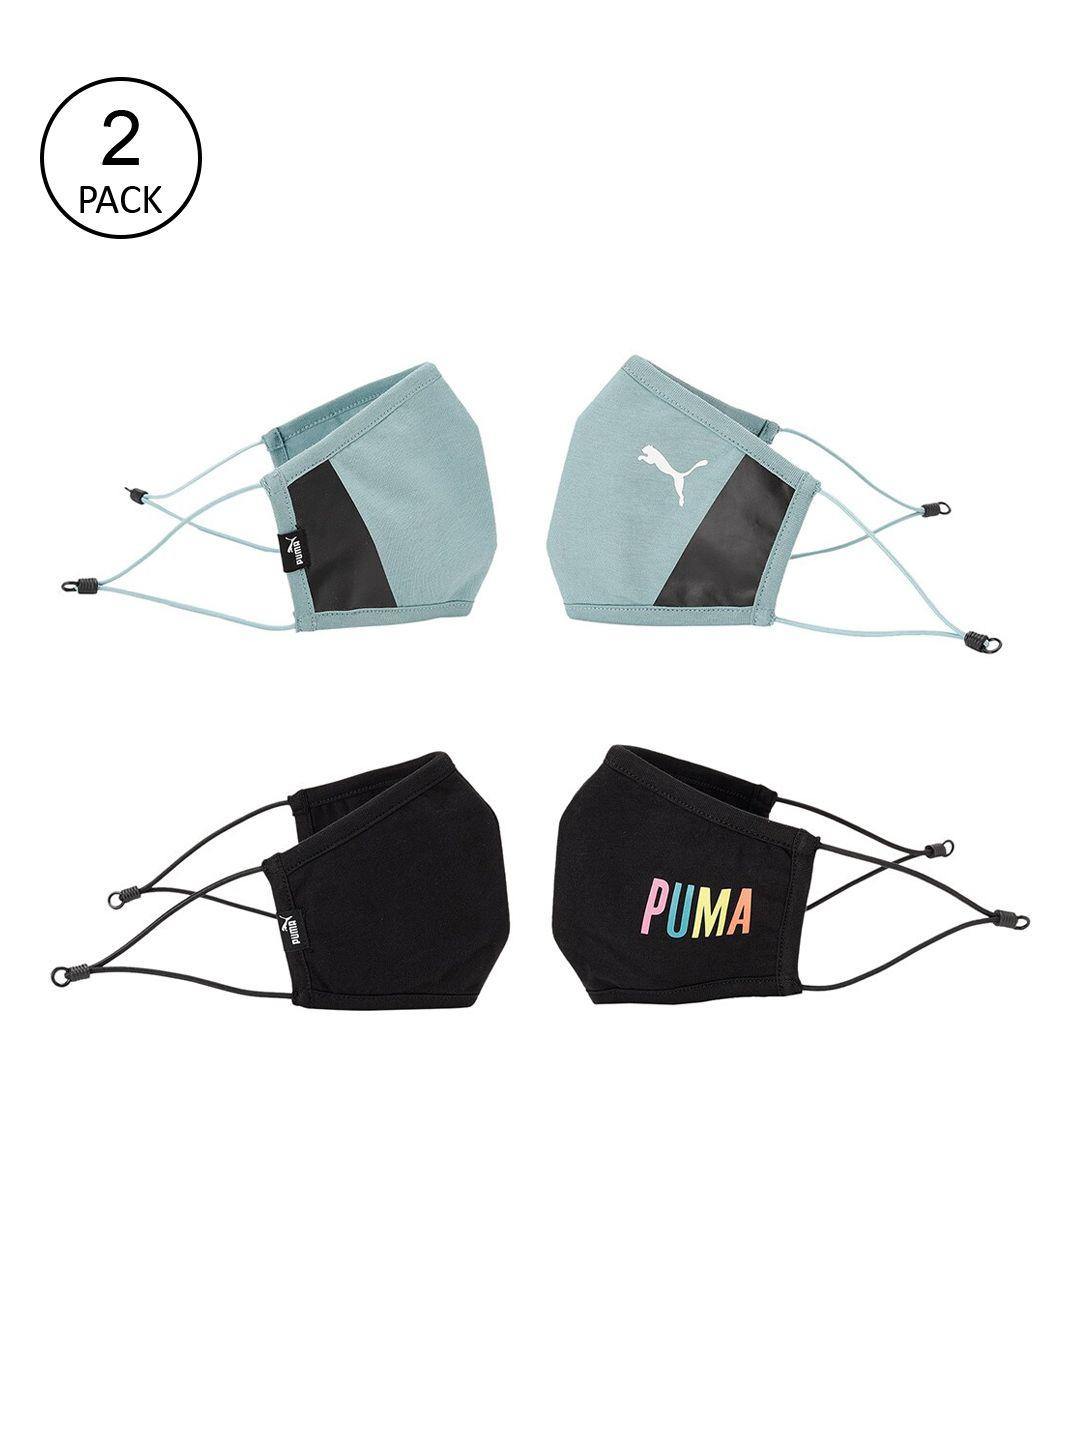 puma-pack-of-2-black-&-pastel-blue-reusable-face-mask